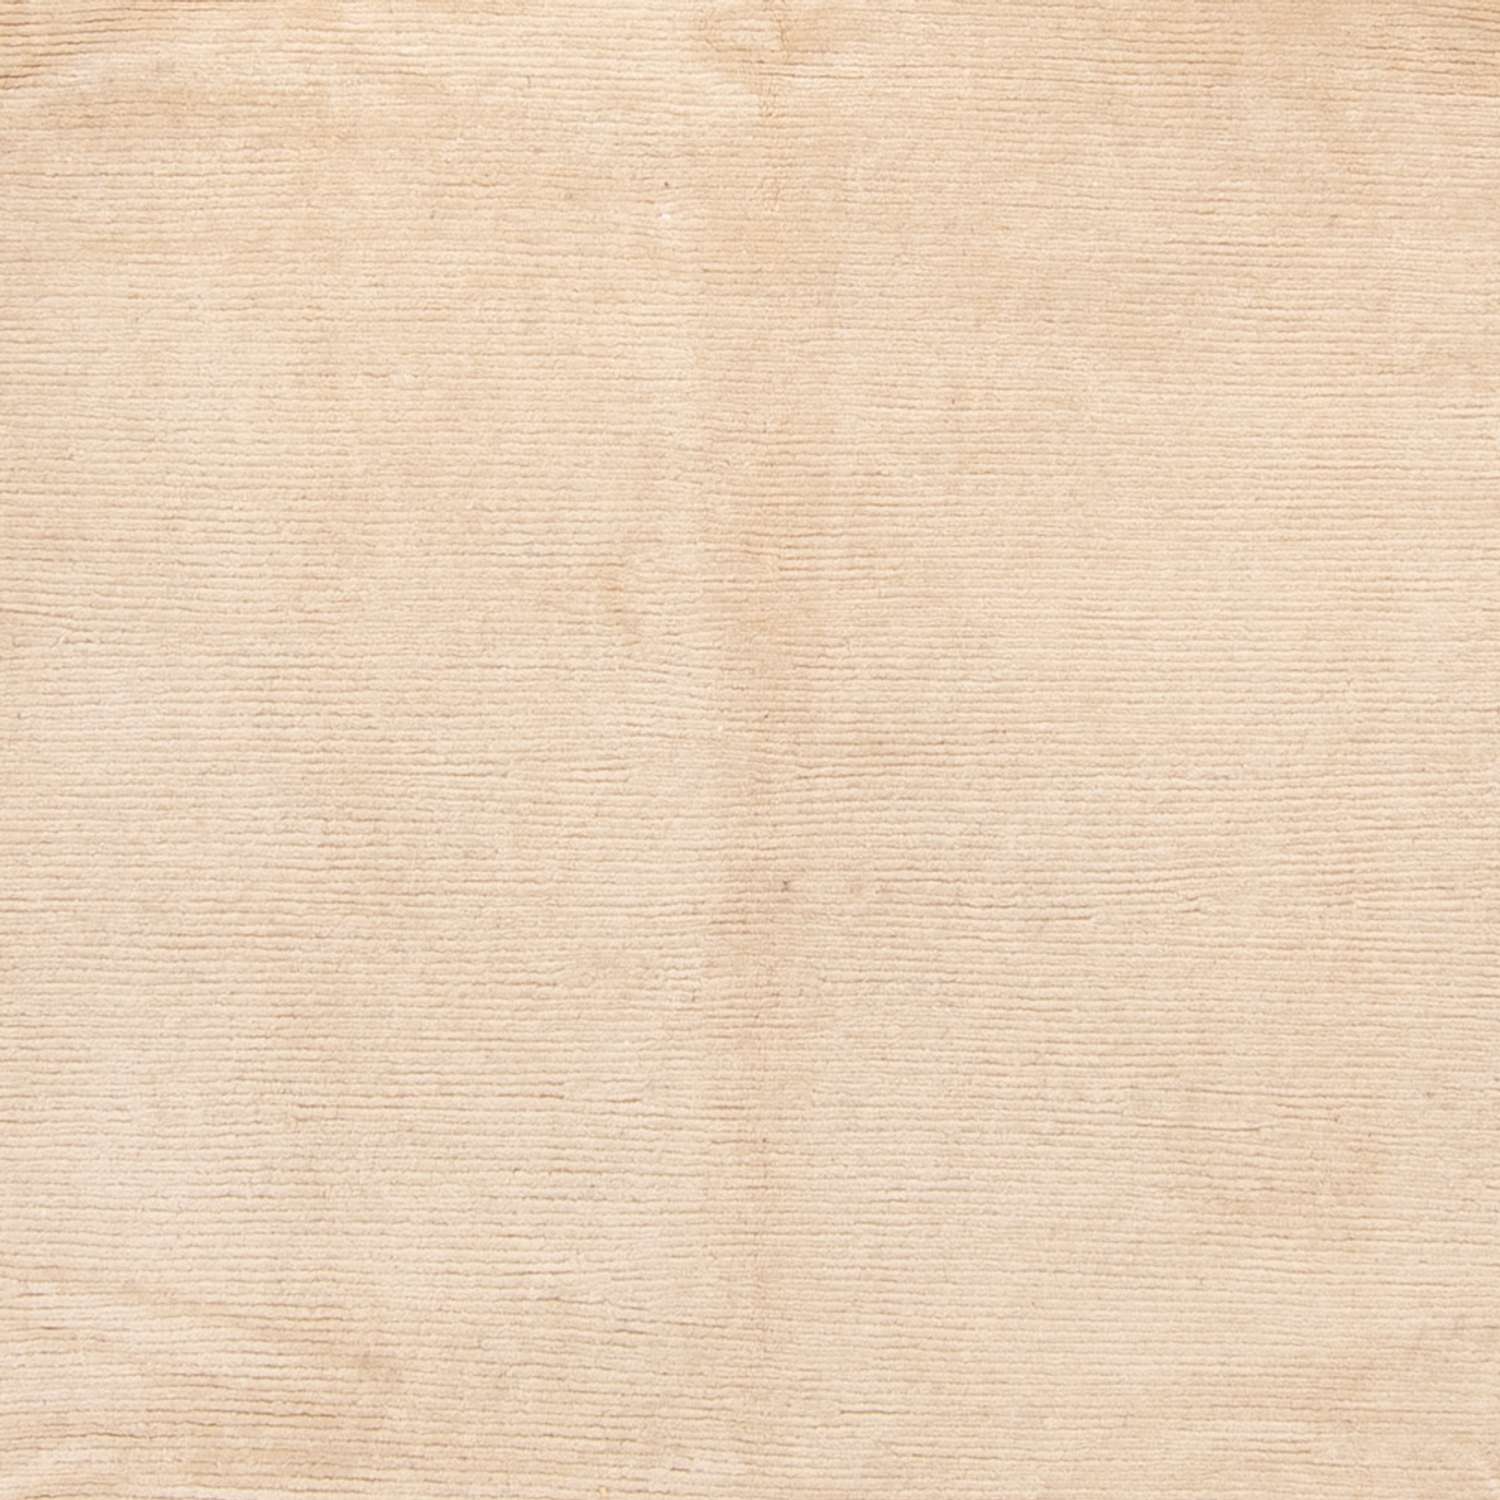 Nepal Rug - 355 x 257 cm - beige